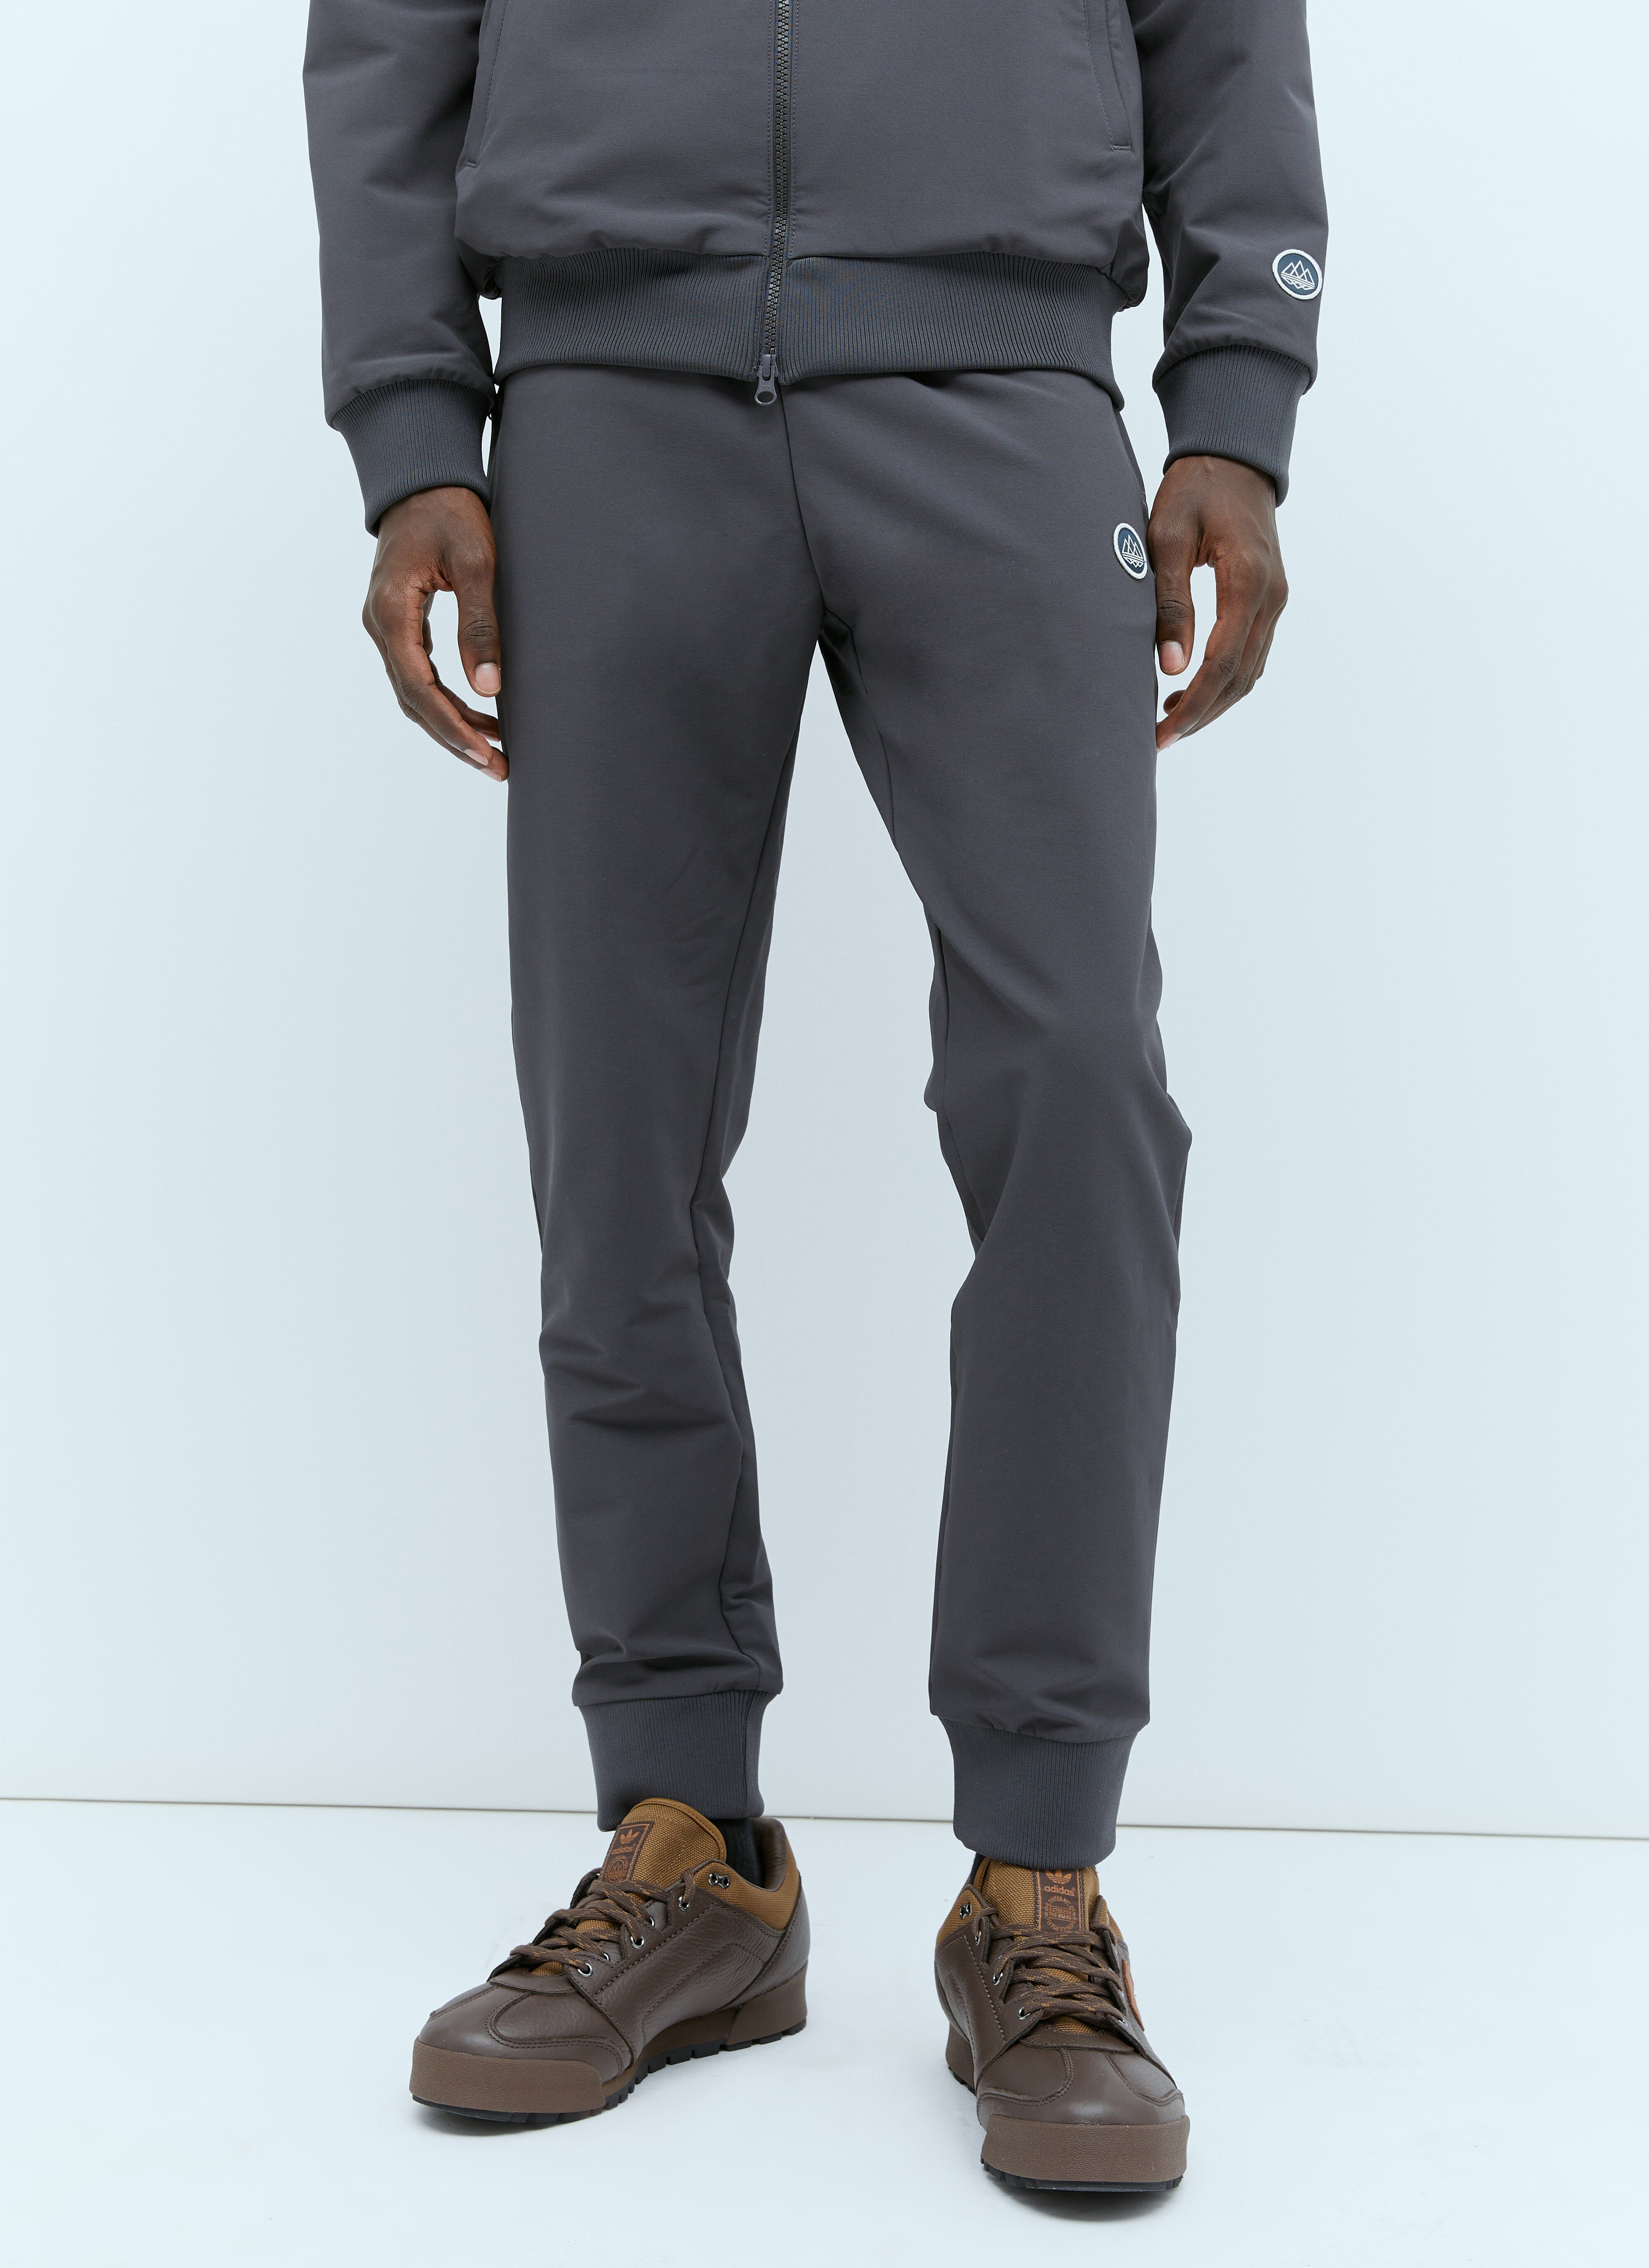 adidas Originals by SPZL Sudell Track Pants Grey aos0157023